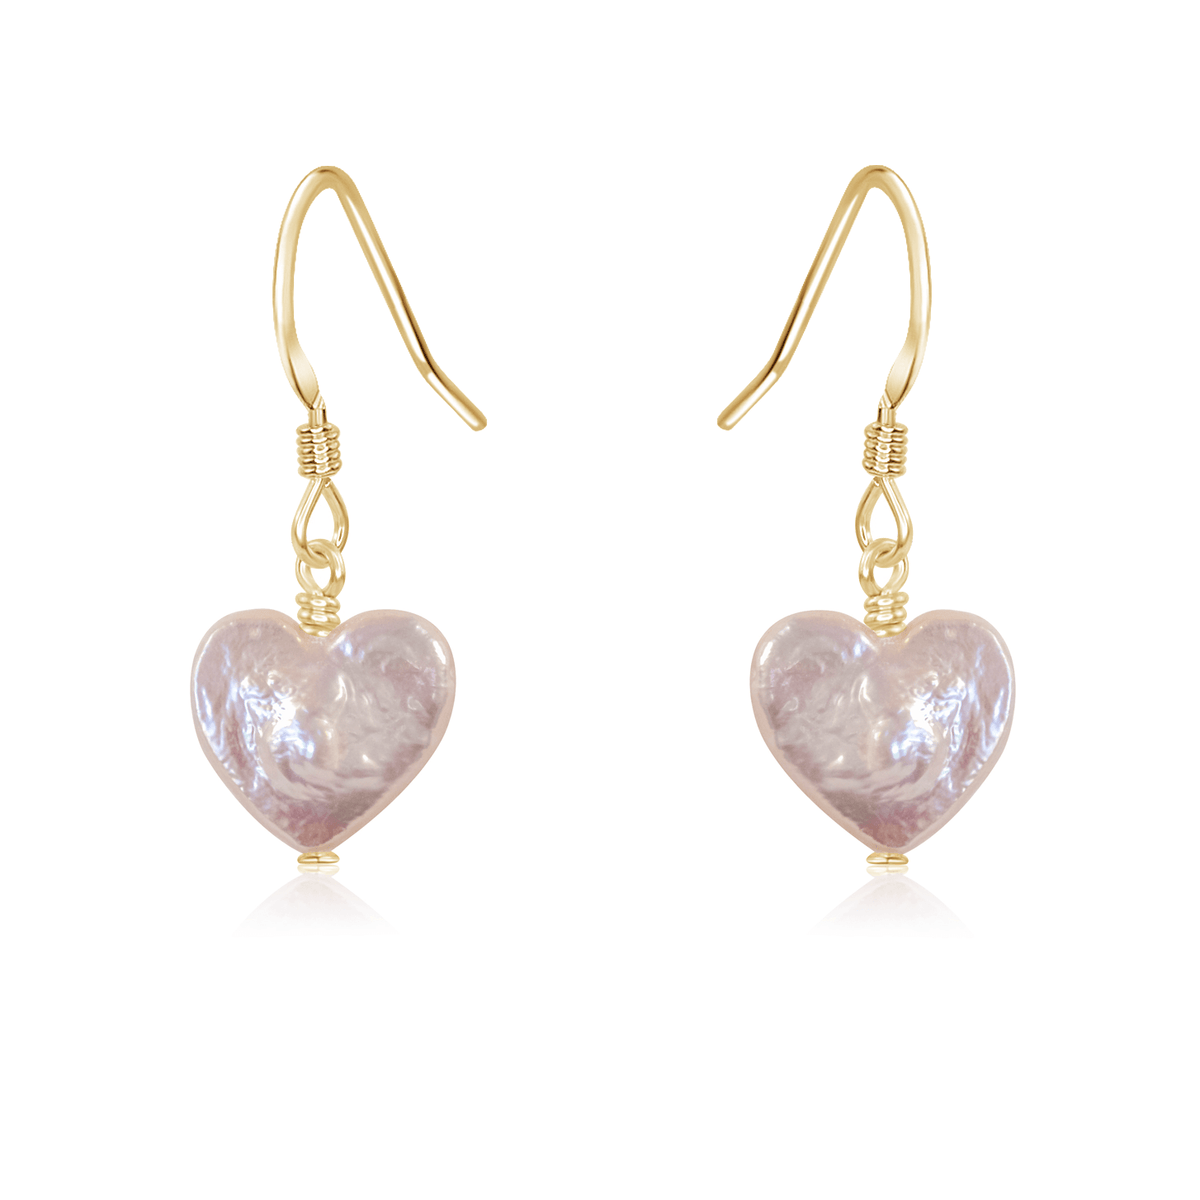 Freshwater Pearl Heart Dangle Earrings - Freshwater Pearl Heart Dangle Earrings - 14k Gold Fill - Luna Tide Handmade Crystal Jewellery